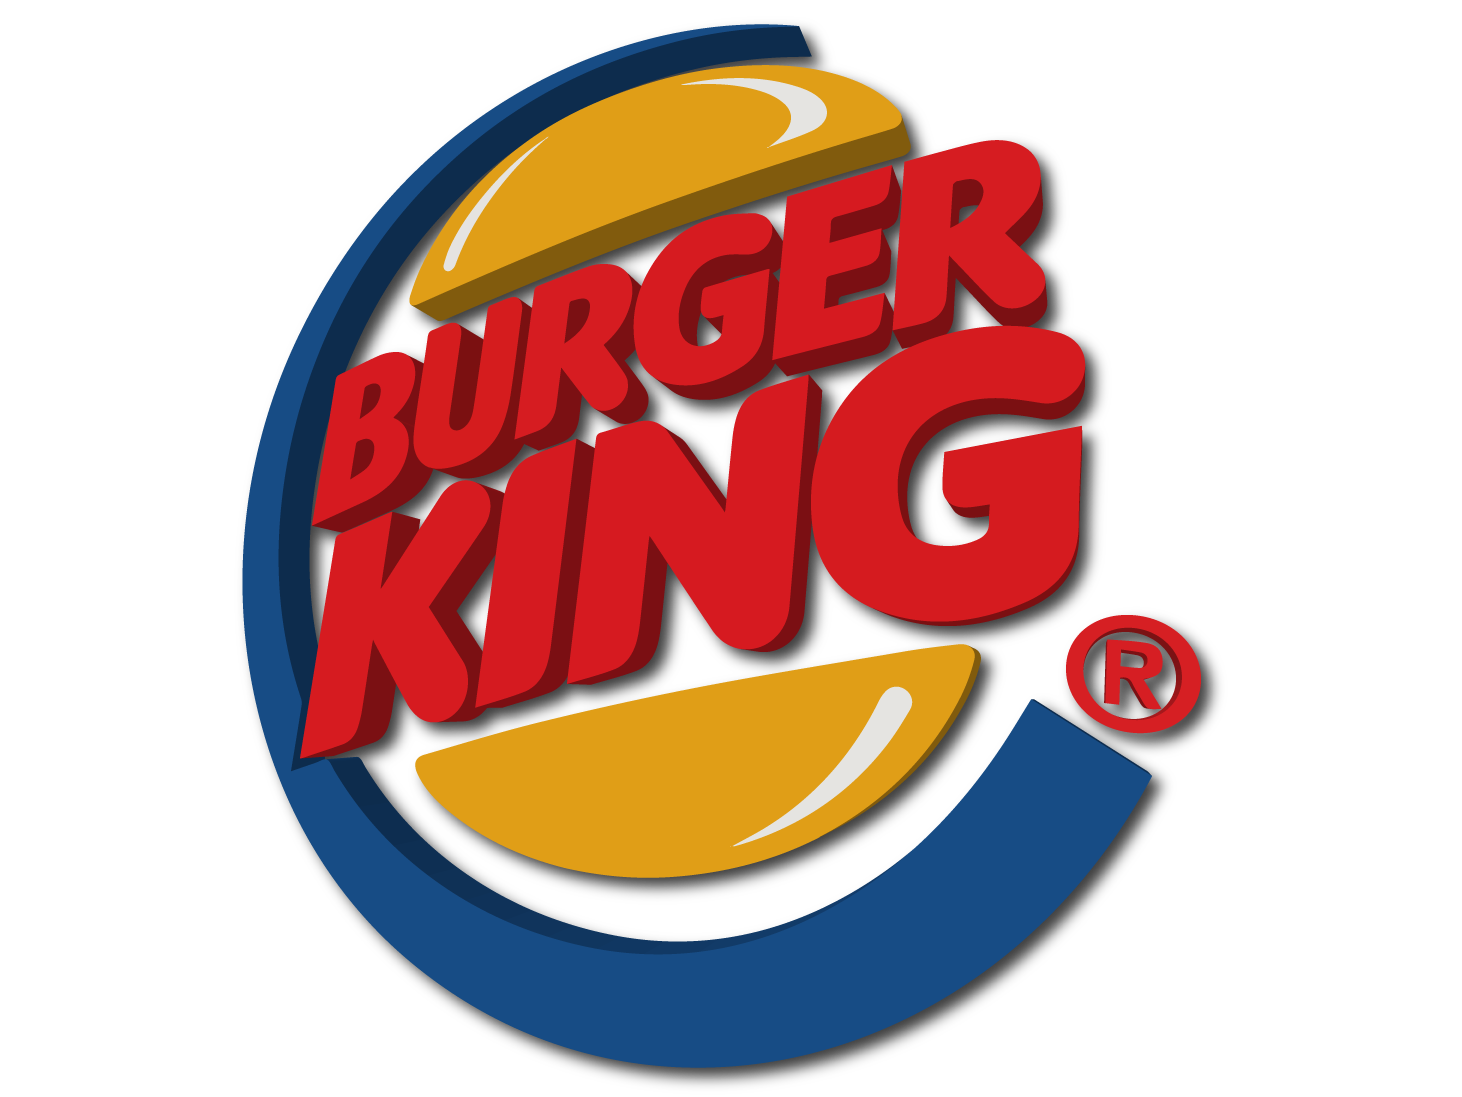 Burger King - Burger King Bes